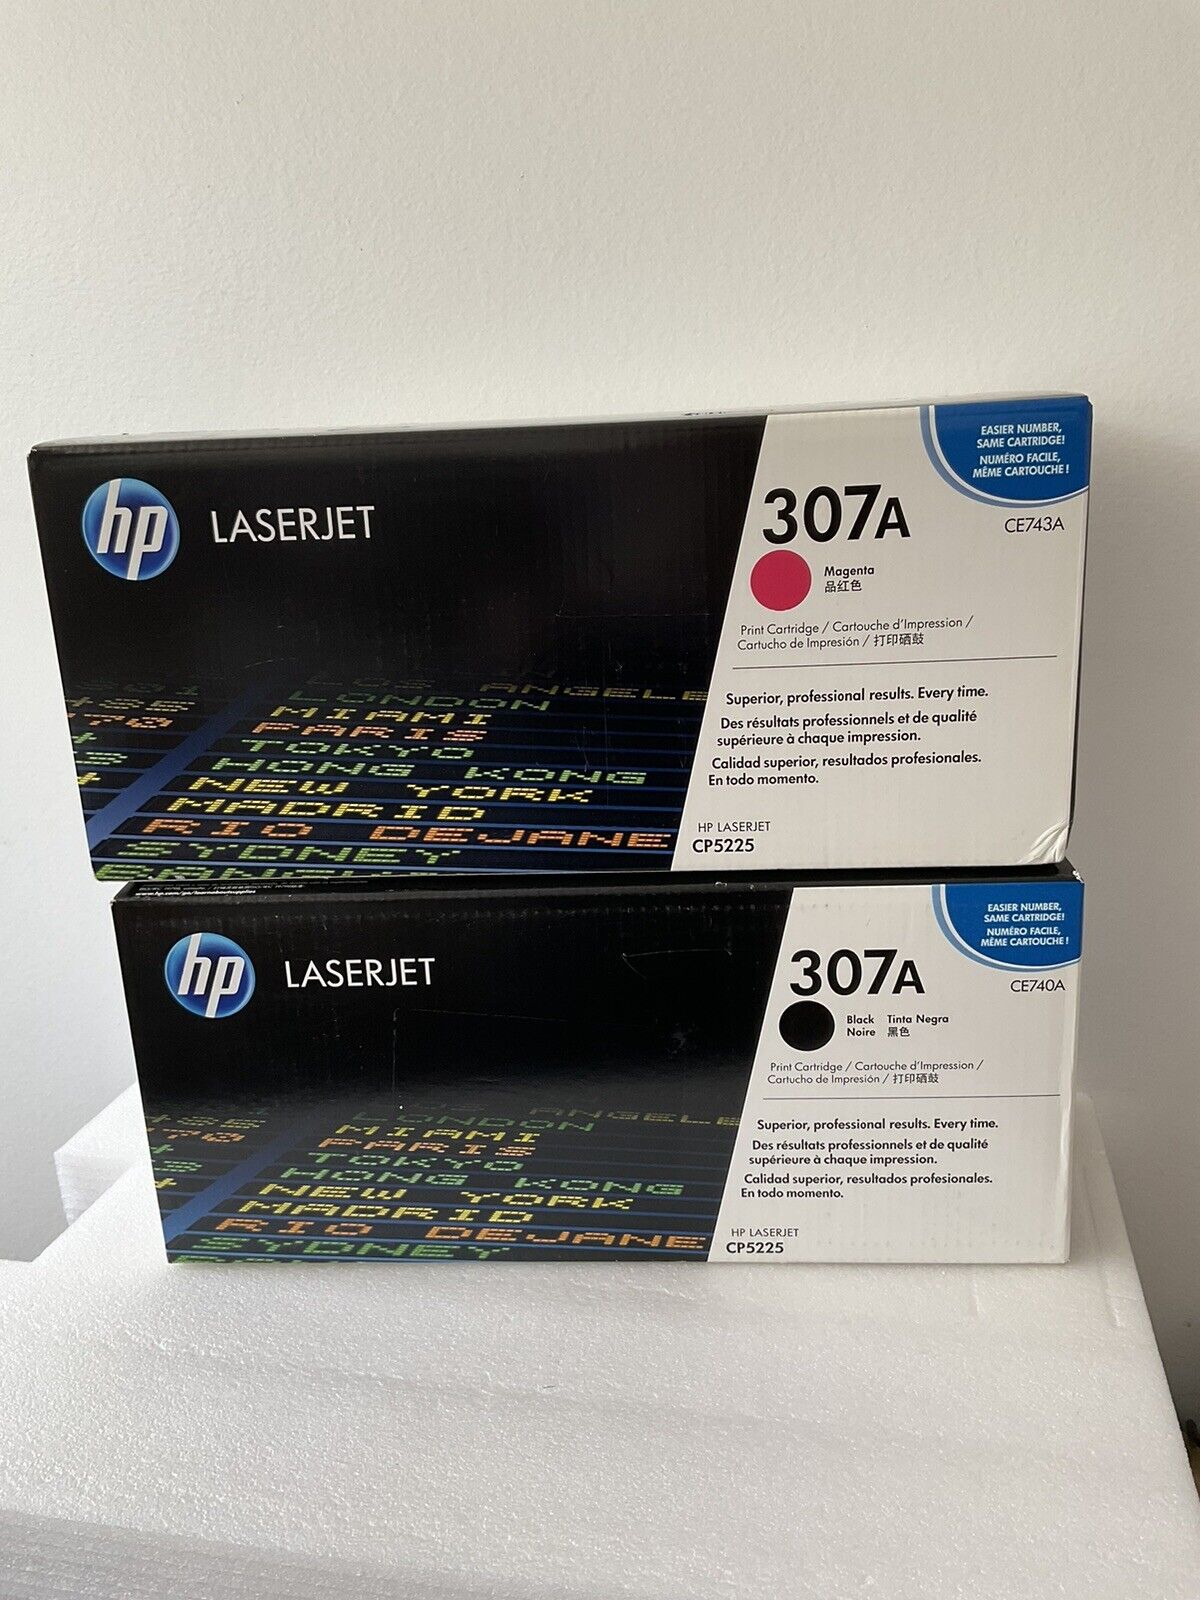 HP MAGENTA CE743A+ CE740A 307A BLACK  Yield Toner Cartridge Color LaserJet